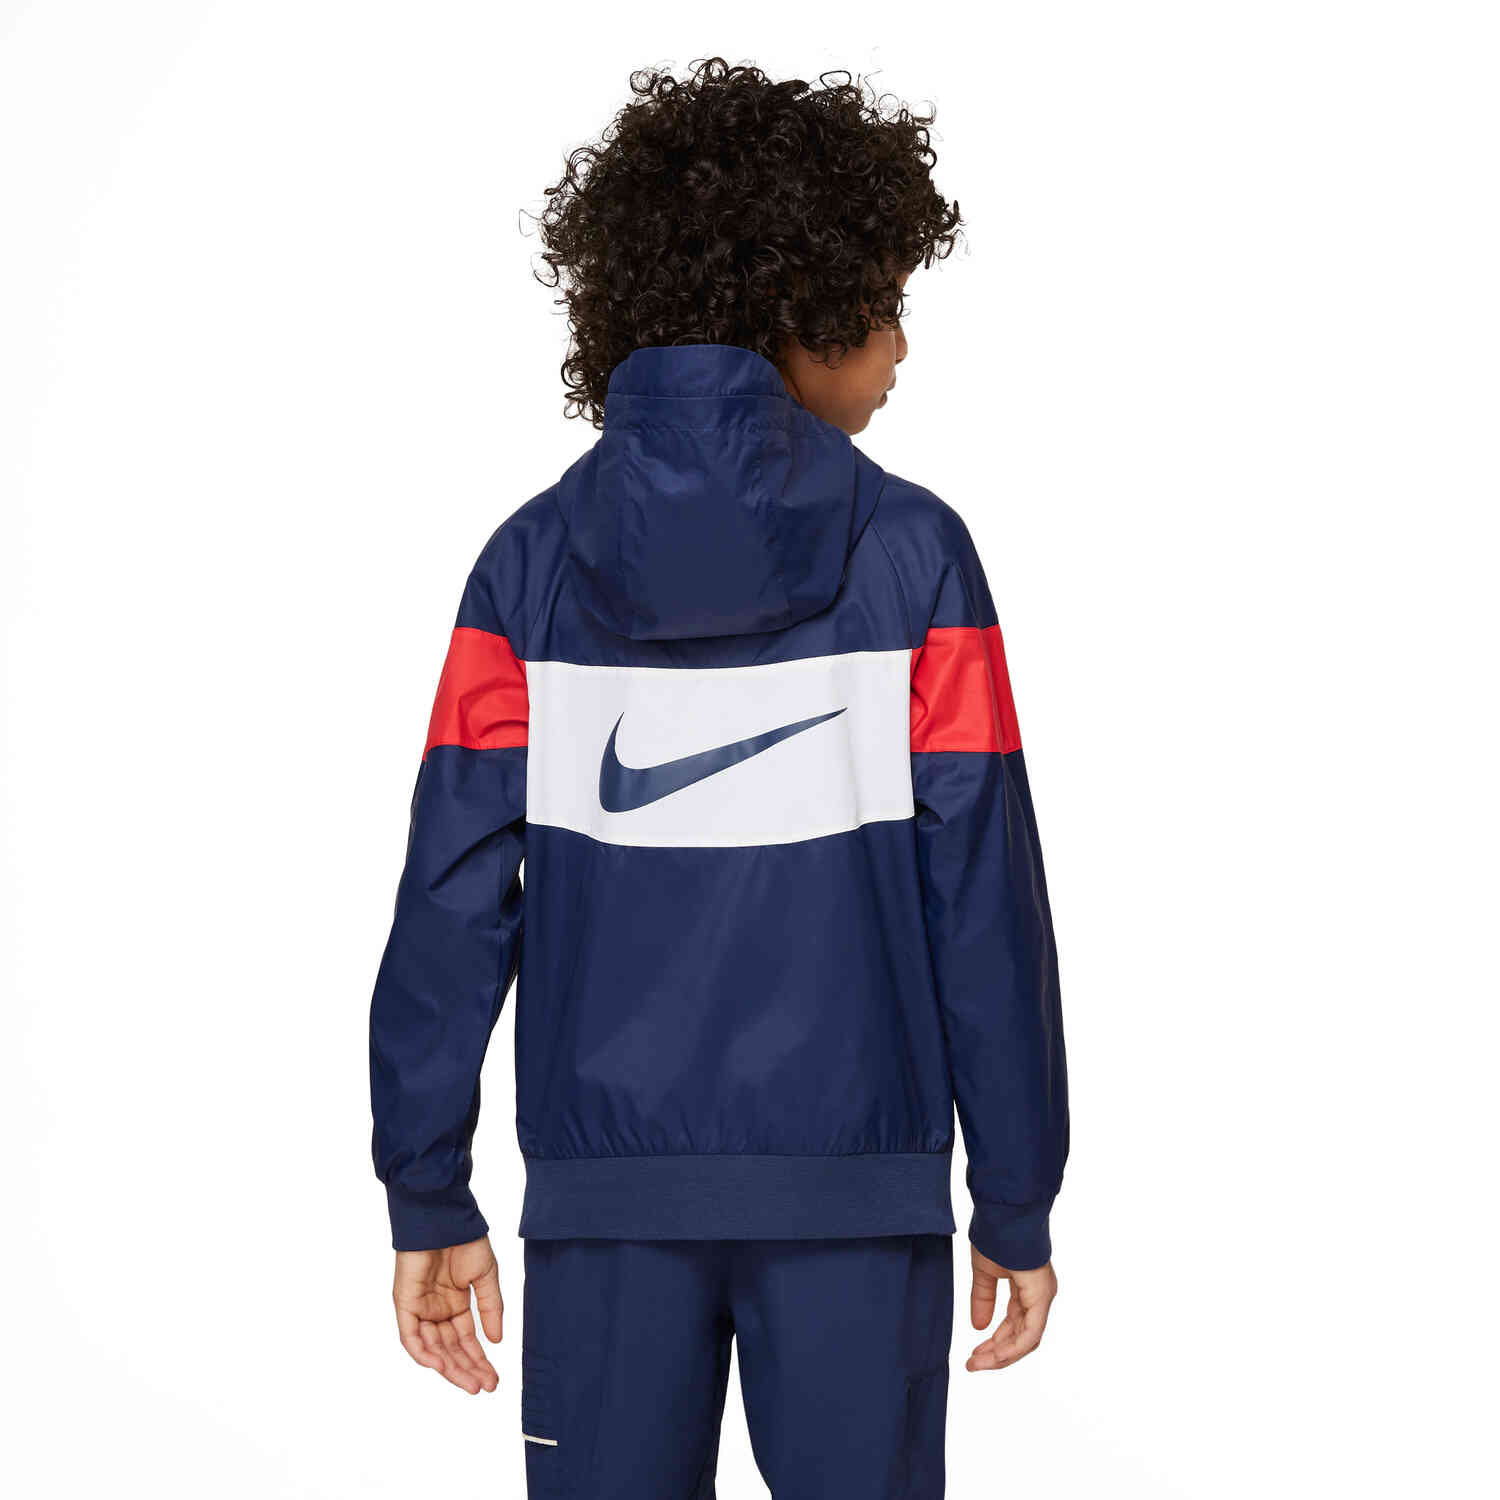 Offizieller Online-Shop Kids Nike PSG Navy/White/University SoccerPro - Jacket - Anthem Red/White Midnight